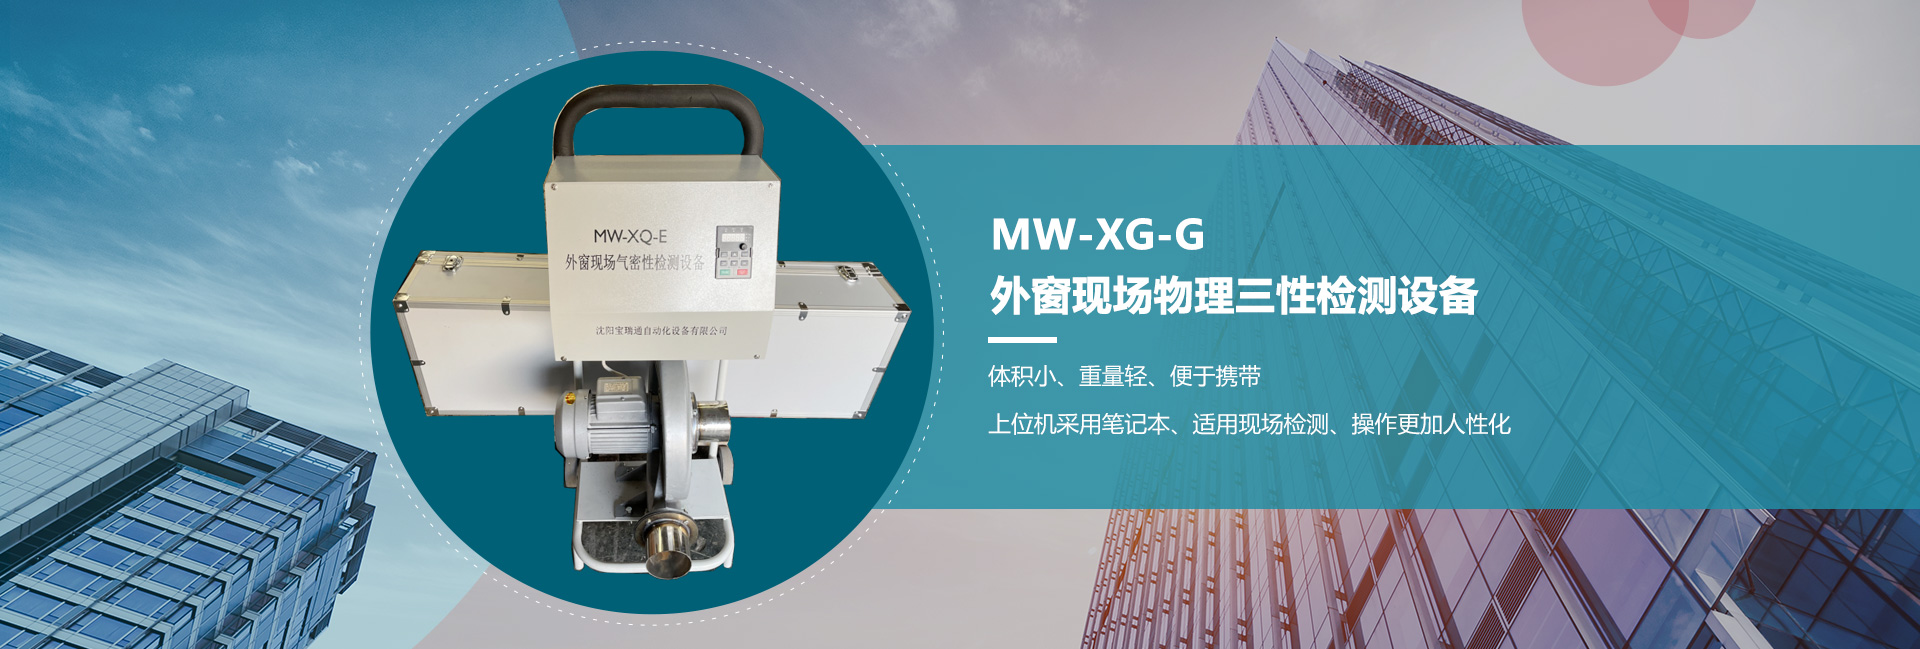 MW-XG-G外窗现场物理三性检测设备